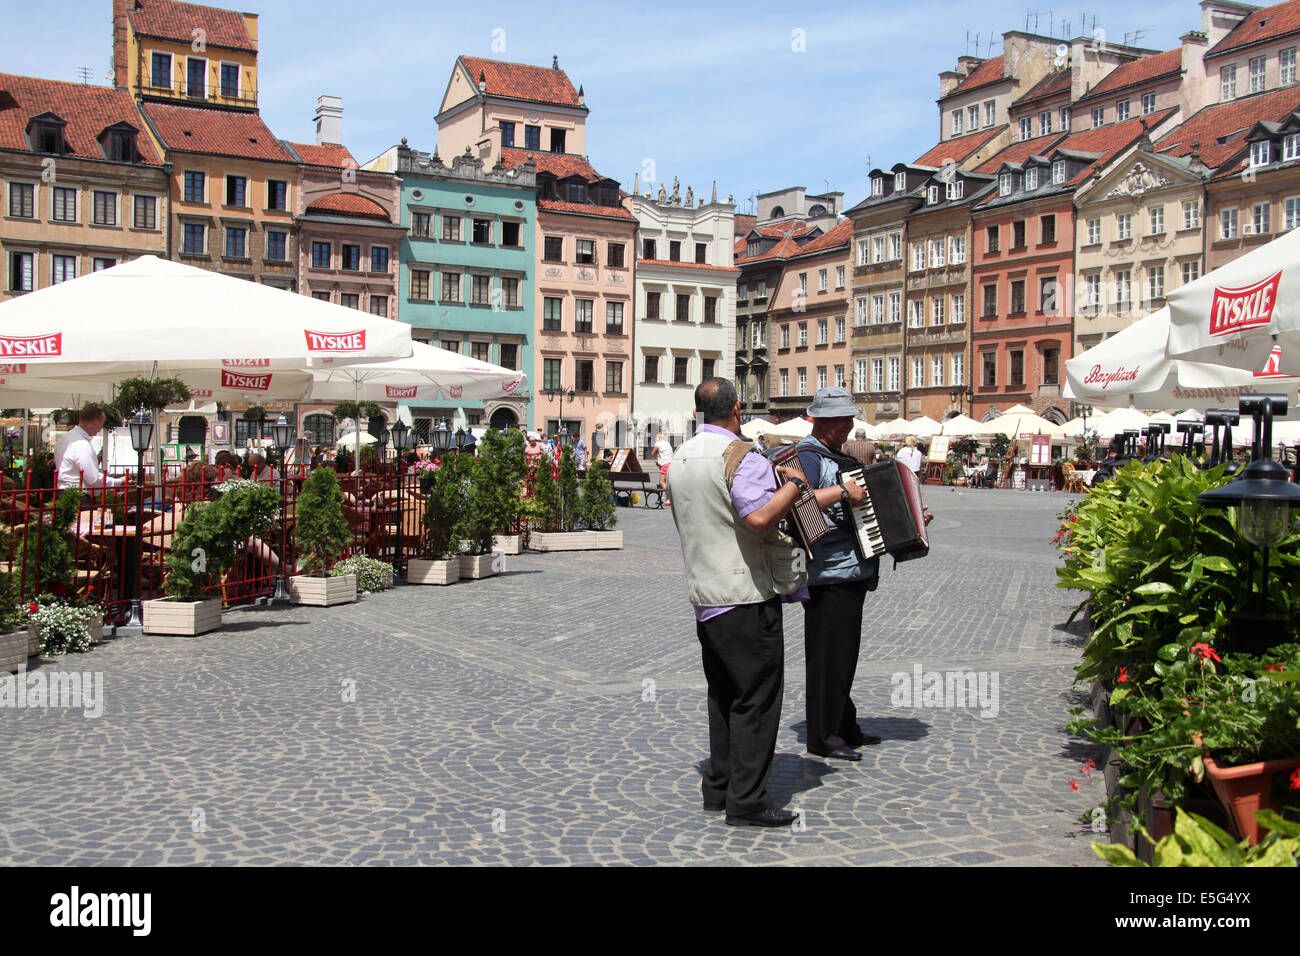 Musiker spielen in der berühmten Warschau Marktplatz Altstadt Stockfoto